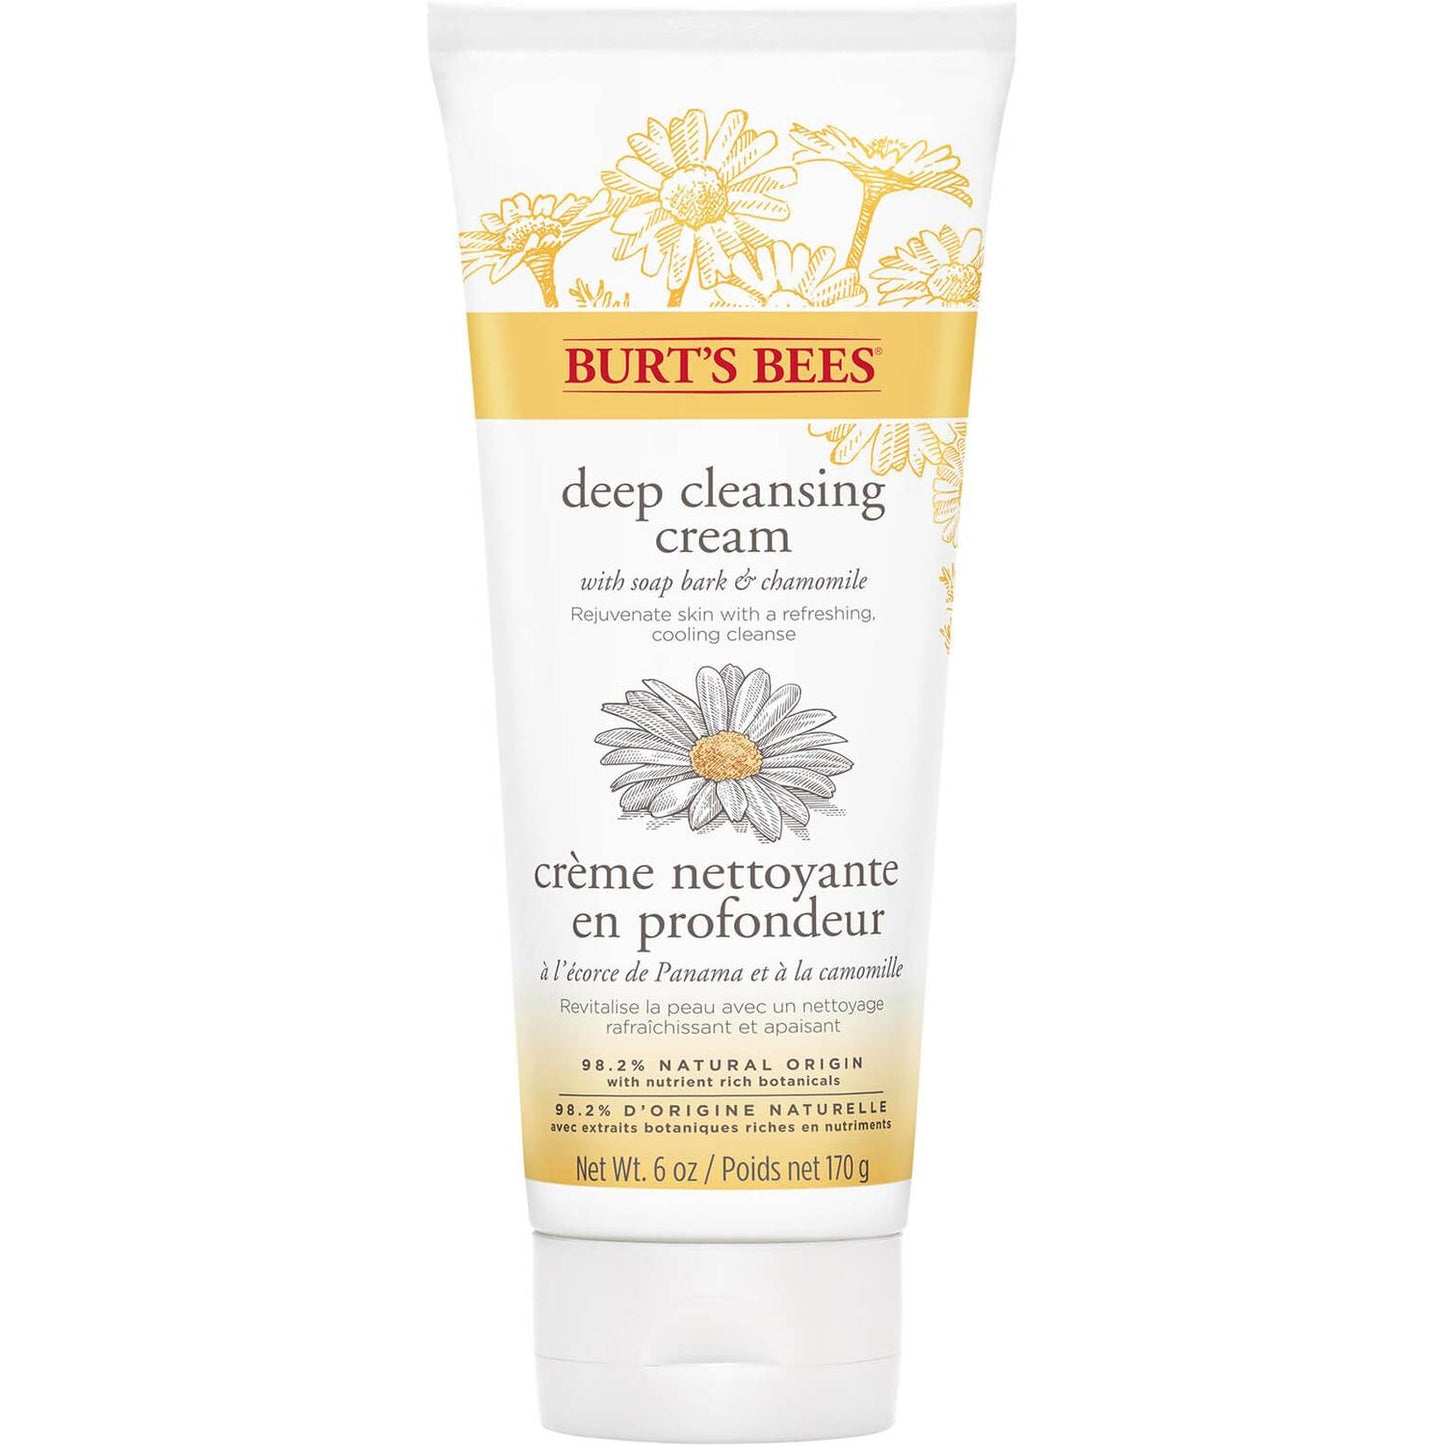 Burts Bees Deep Cleansing Cream - Soap Bark & Chamomile